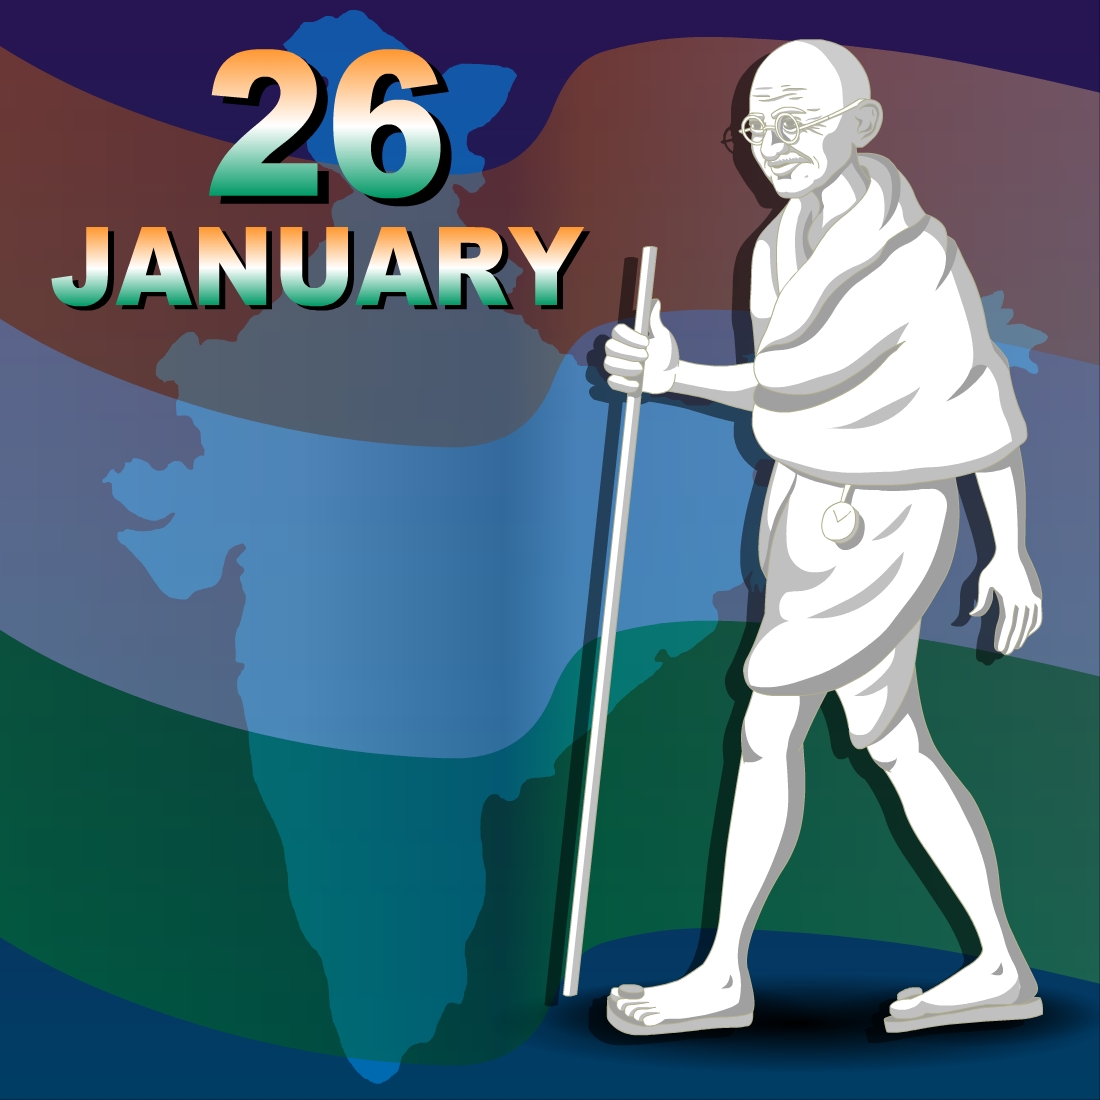 Amazing image of Gandhi on the background of the flag of India